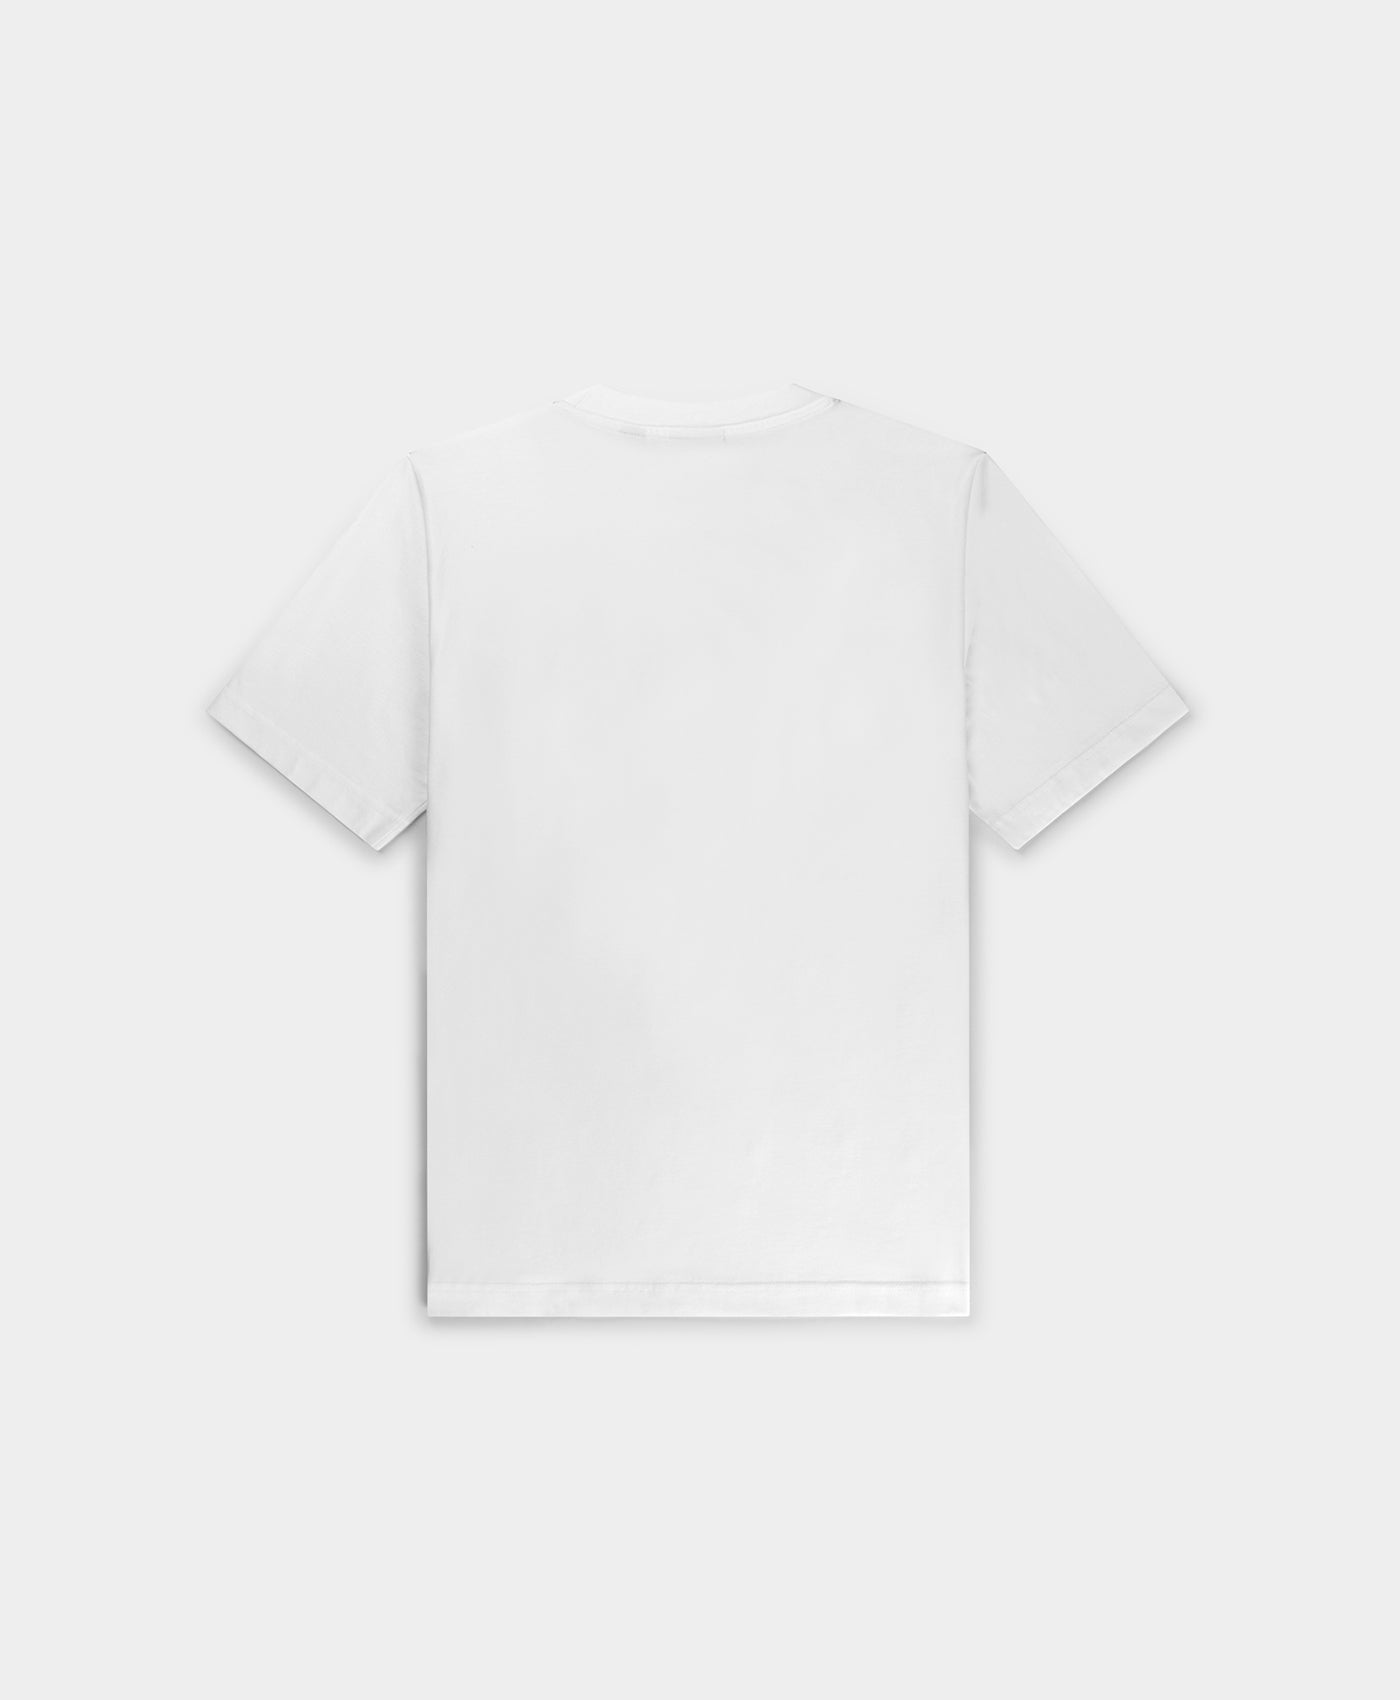 DP - White Remy T-Shirt - Packshot - Rear